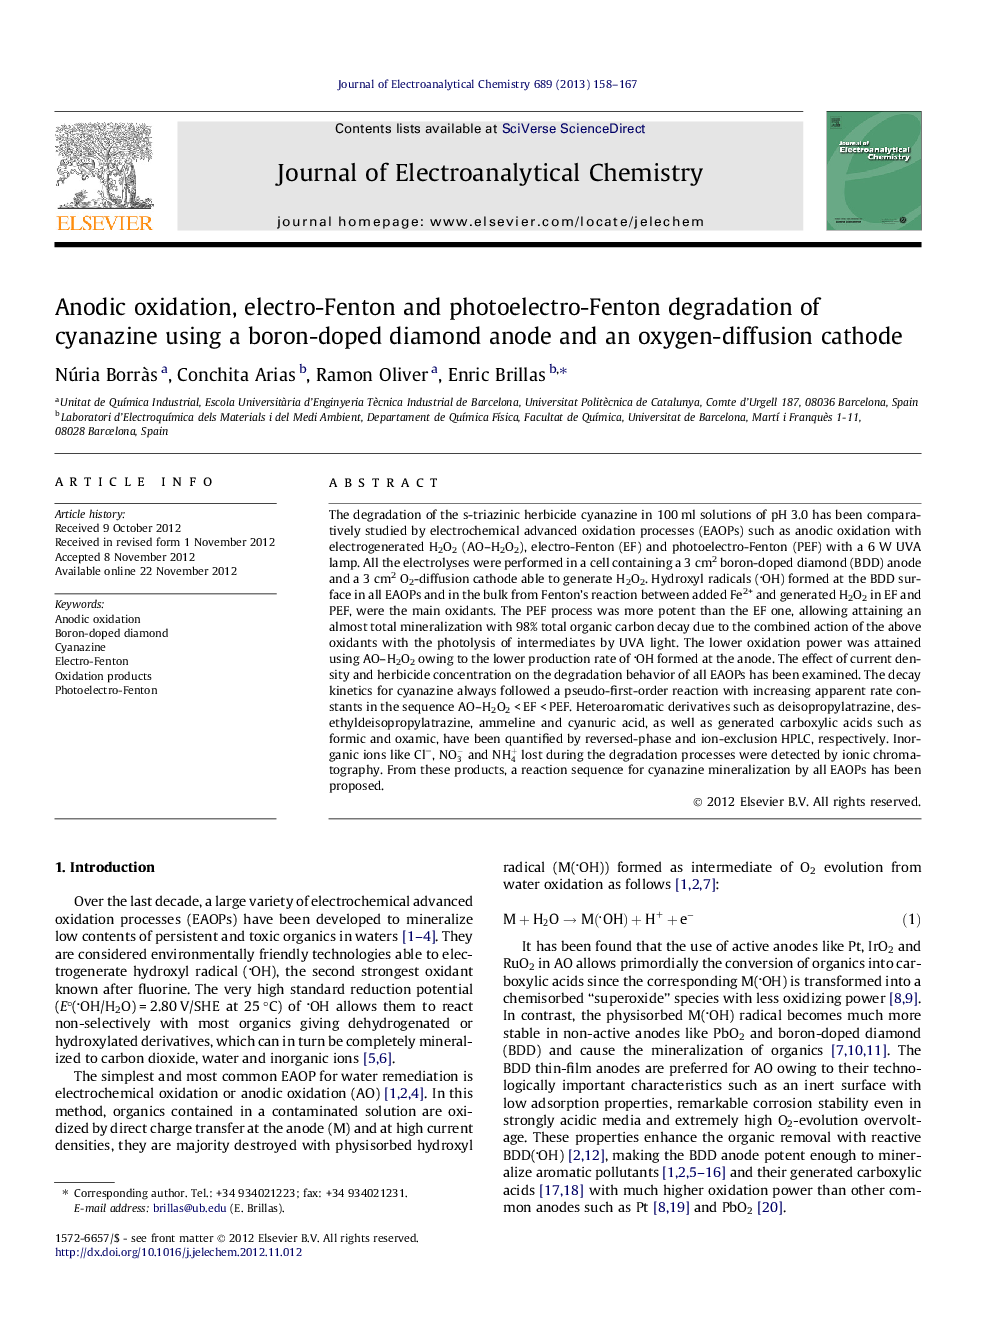 Anodic oxidation, electro-Fenton and photoelectro-Fenton degradation of cyanazine using a boron-doped diamond anode and an oxygen-diffusion cathode